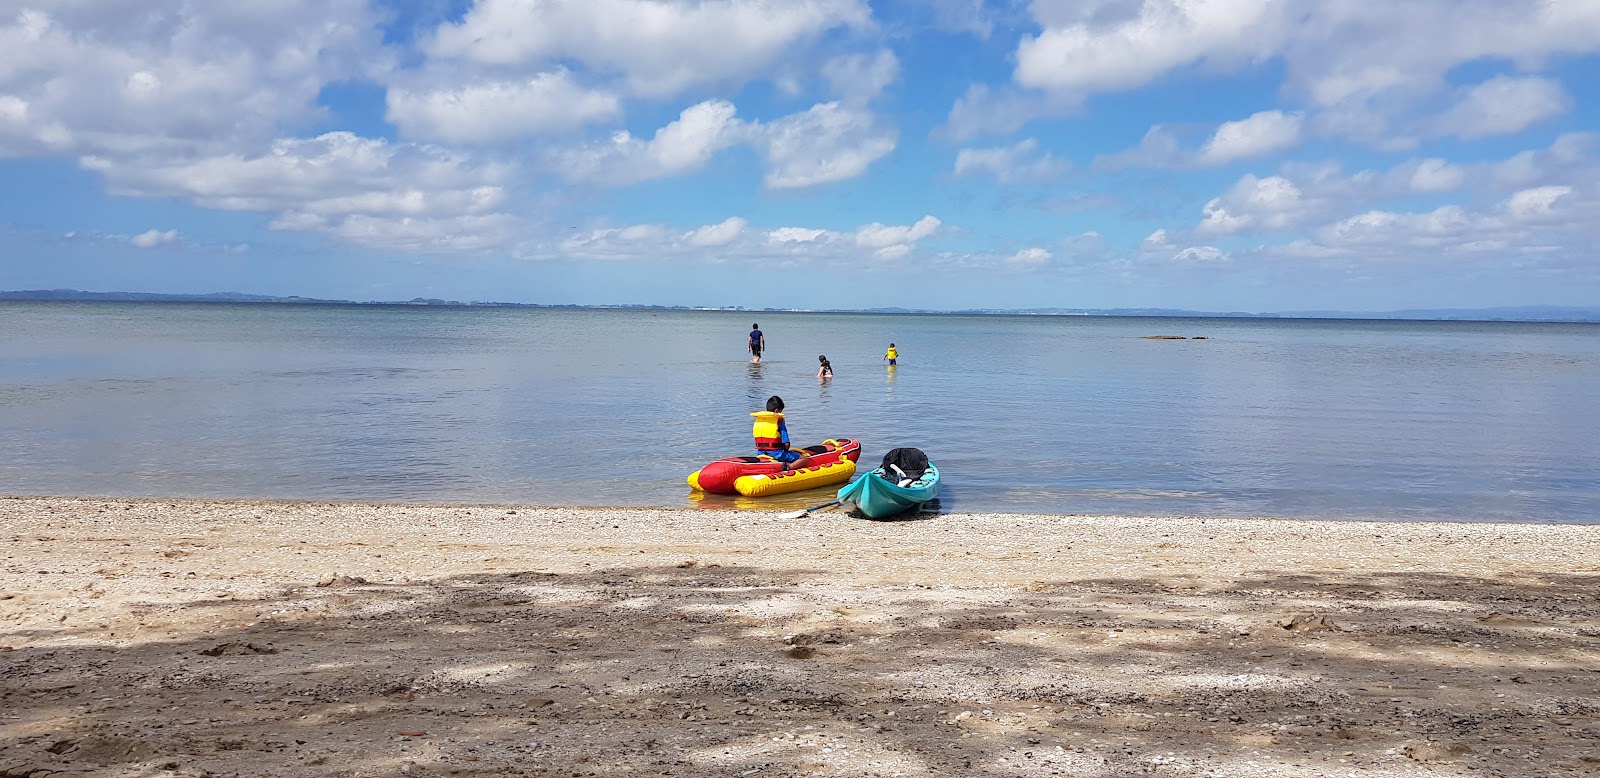 Foto af Matakawau Beach - populært sted blandt afslapningskendere